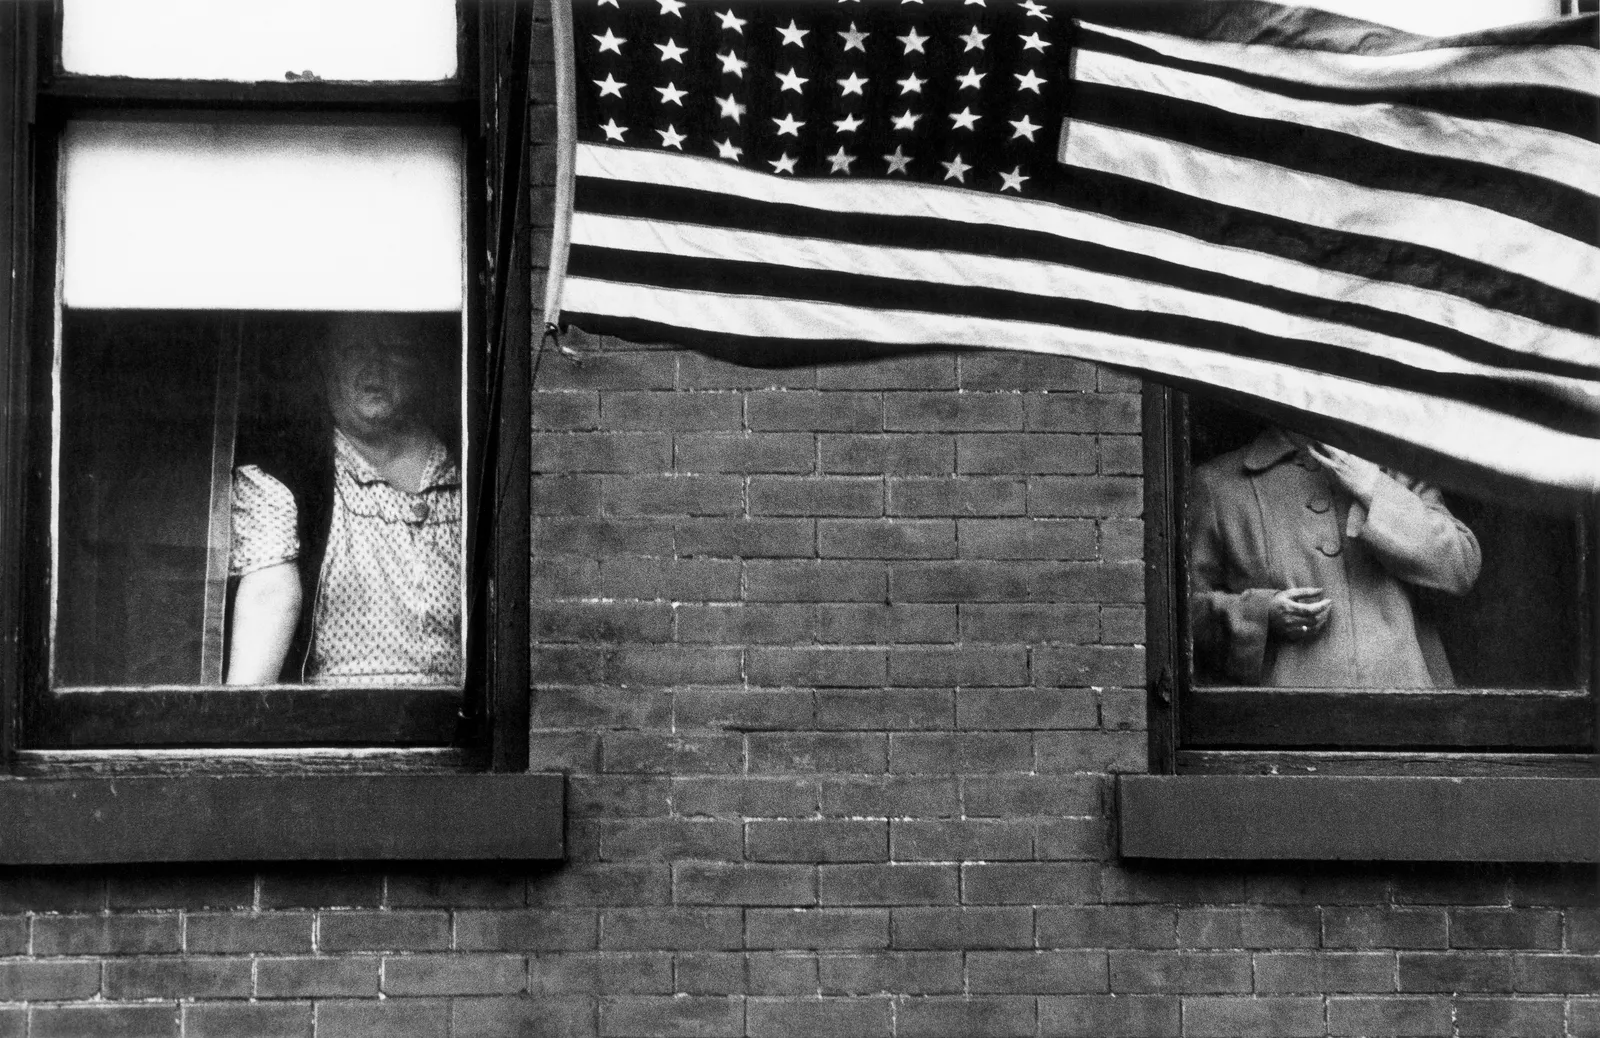 Robert Frank — The Americans